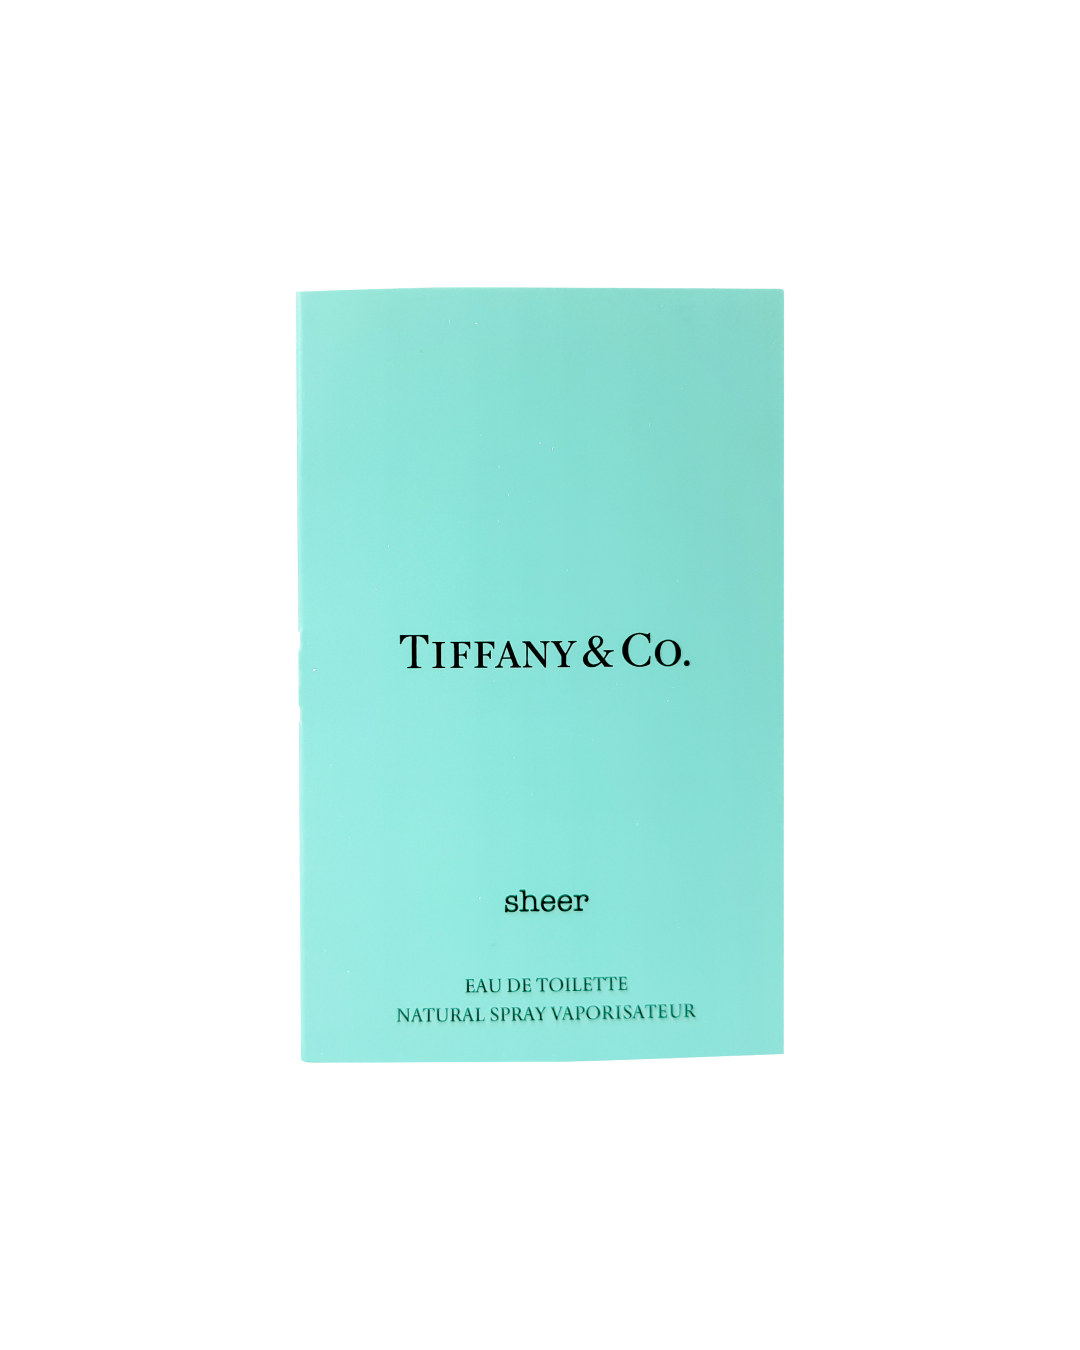 Tiffany & Co. Tiffany Sheer EDT Travel Vial (1.2ml) - Best Buy World Philippines